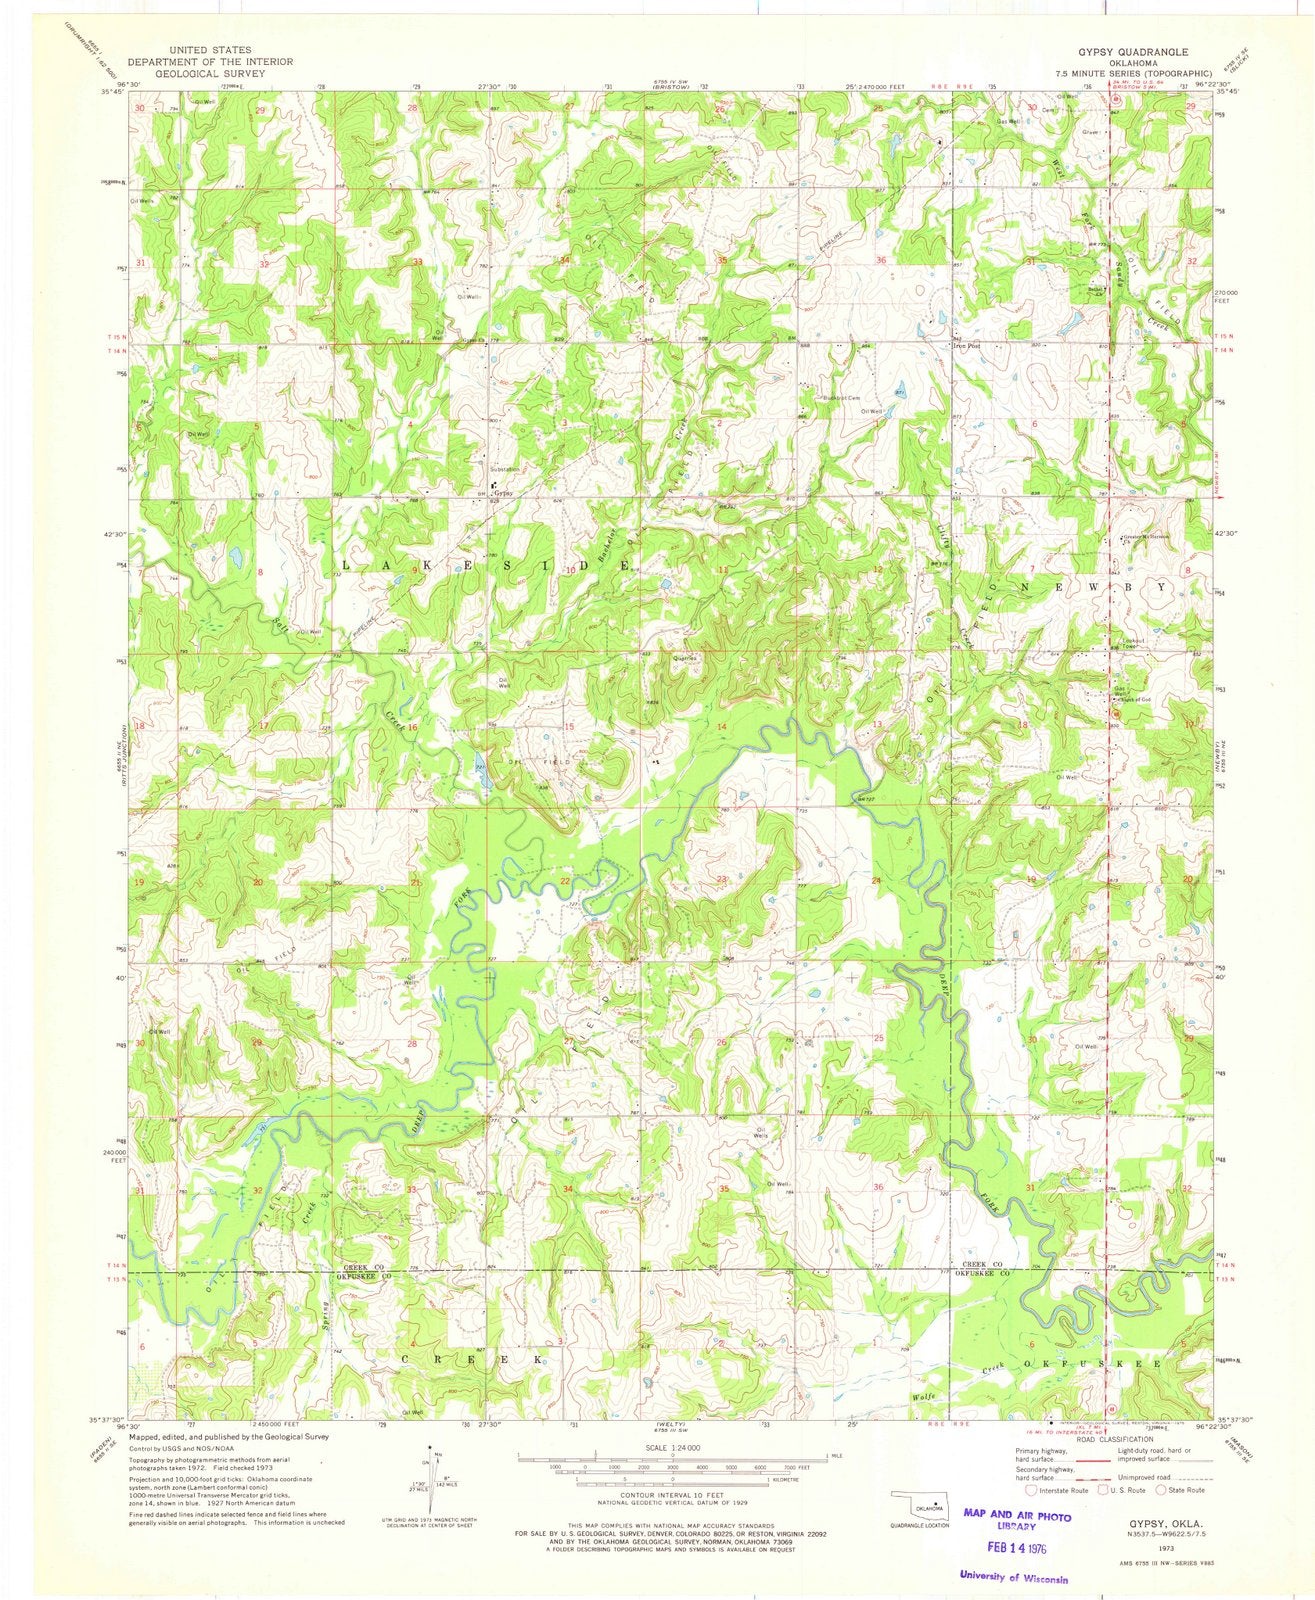 1973 Gypsy, OK - Oklahoma - USGS Topographic Map